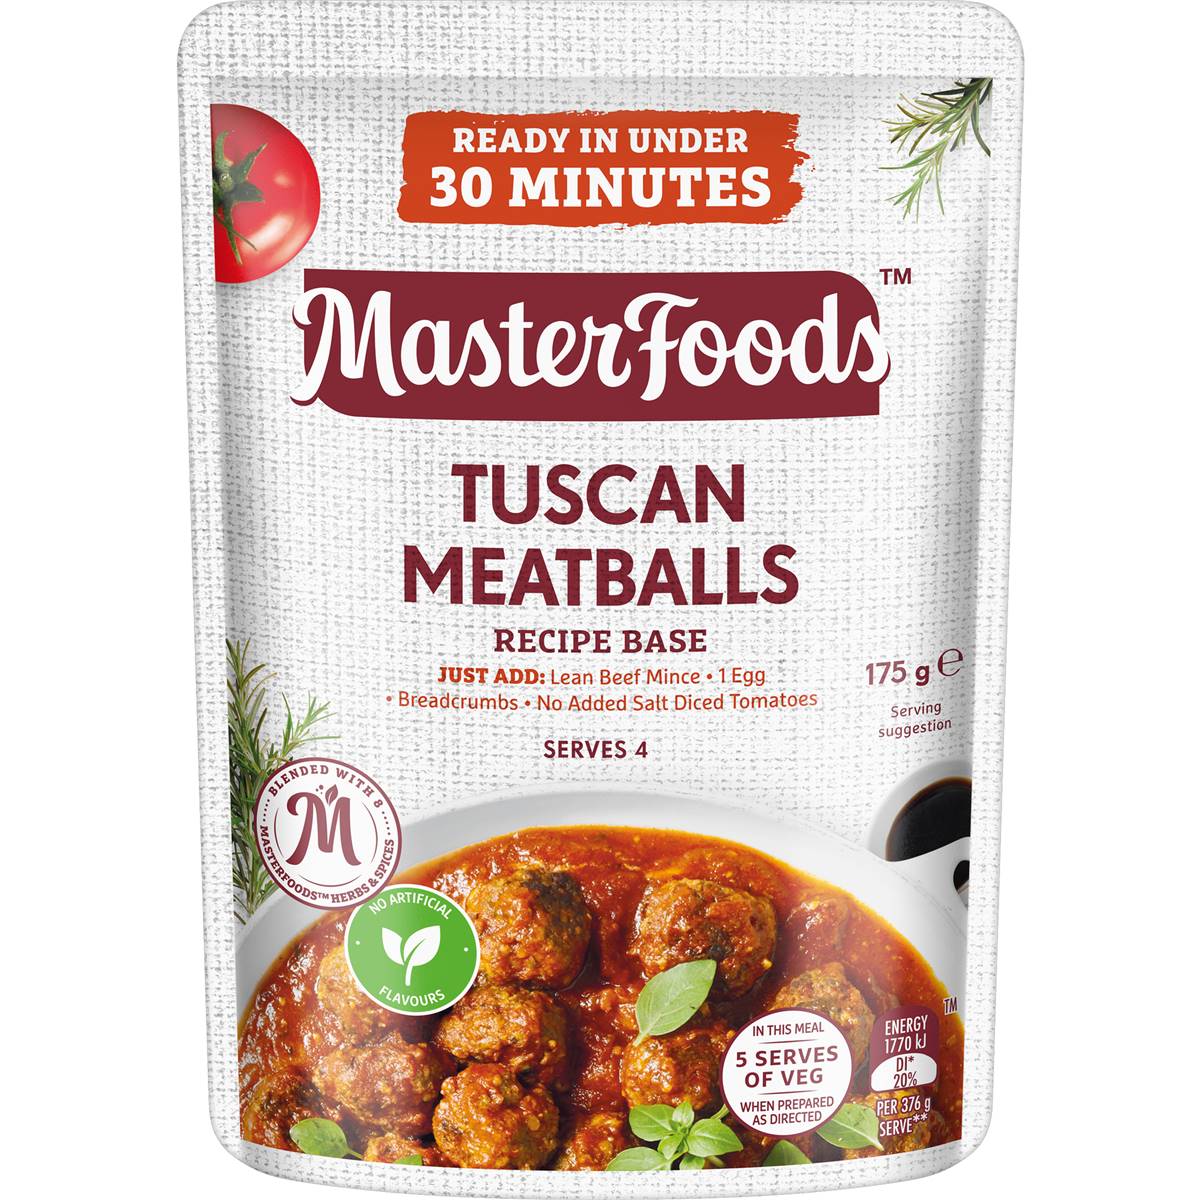 Masterfoods Tuscan Meatballs Recipe Base 175g